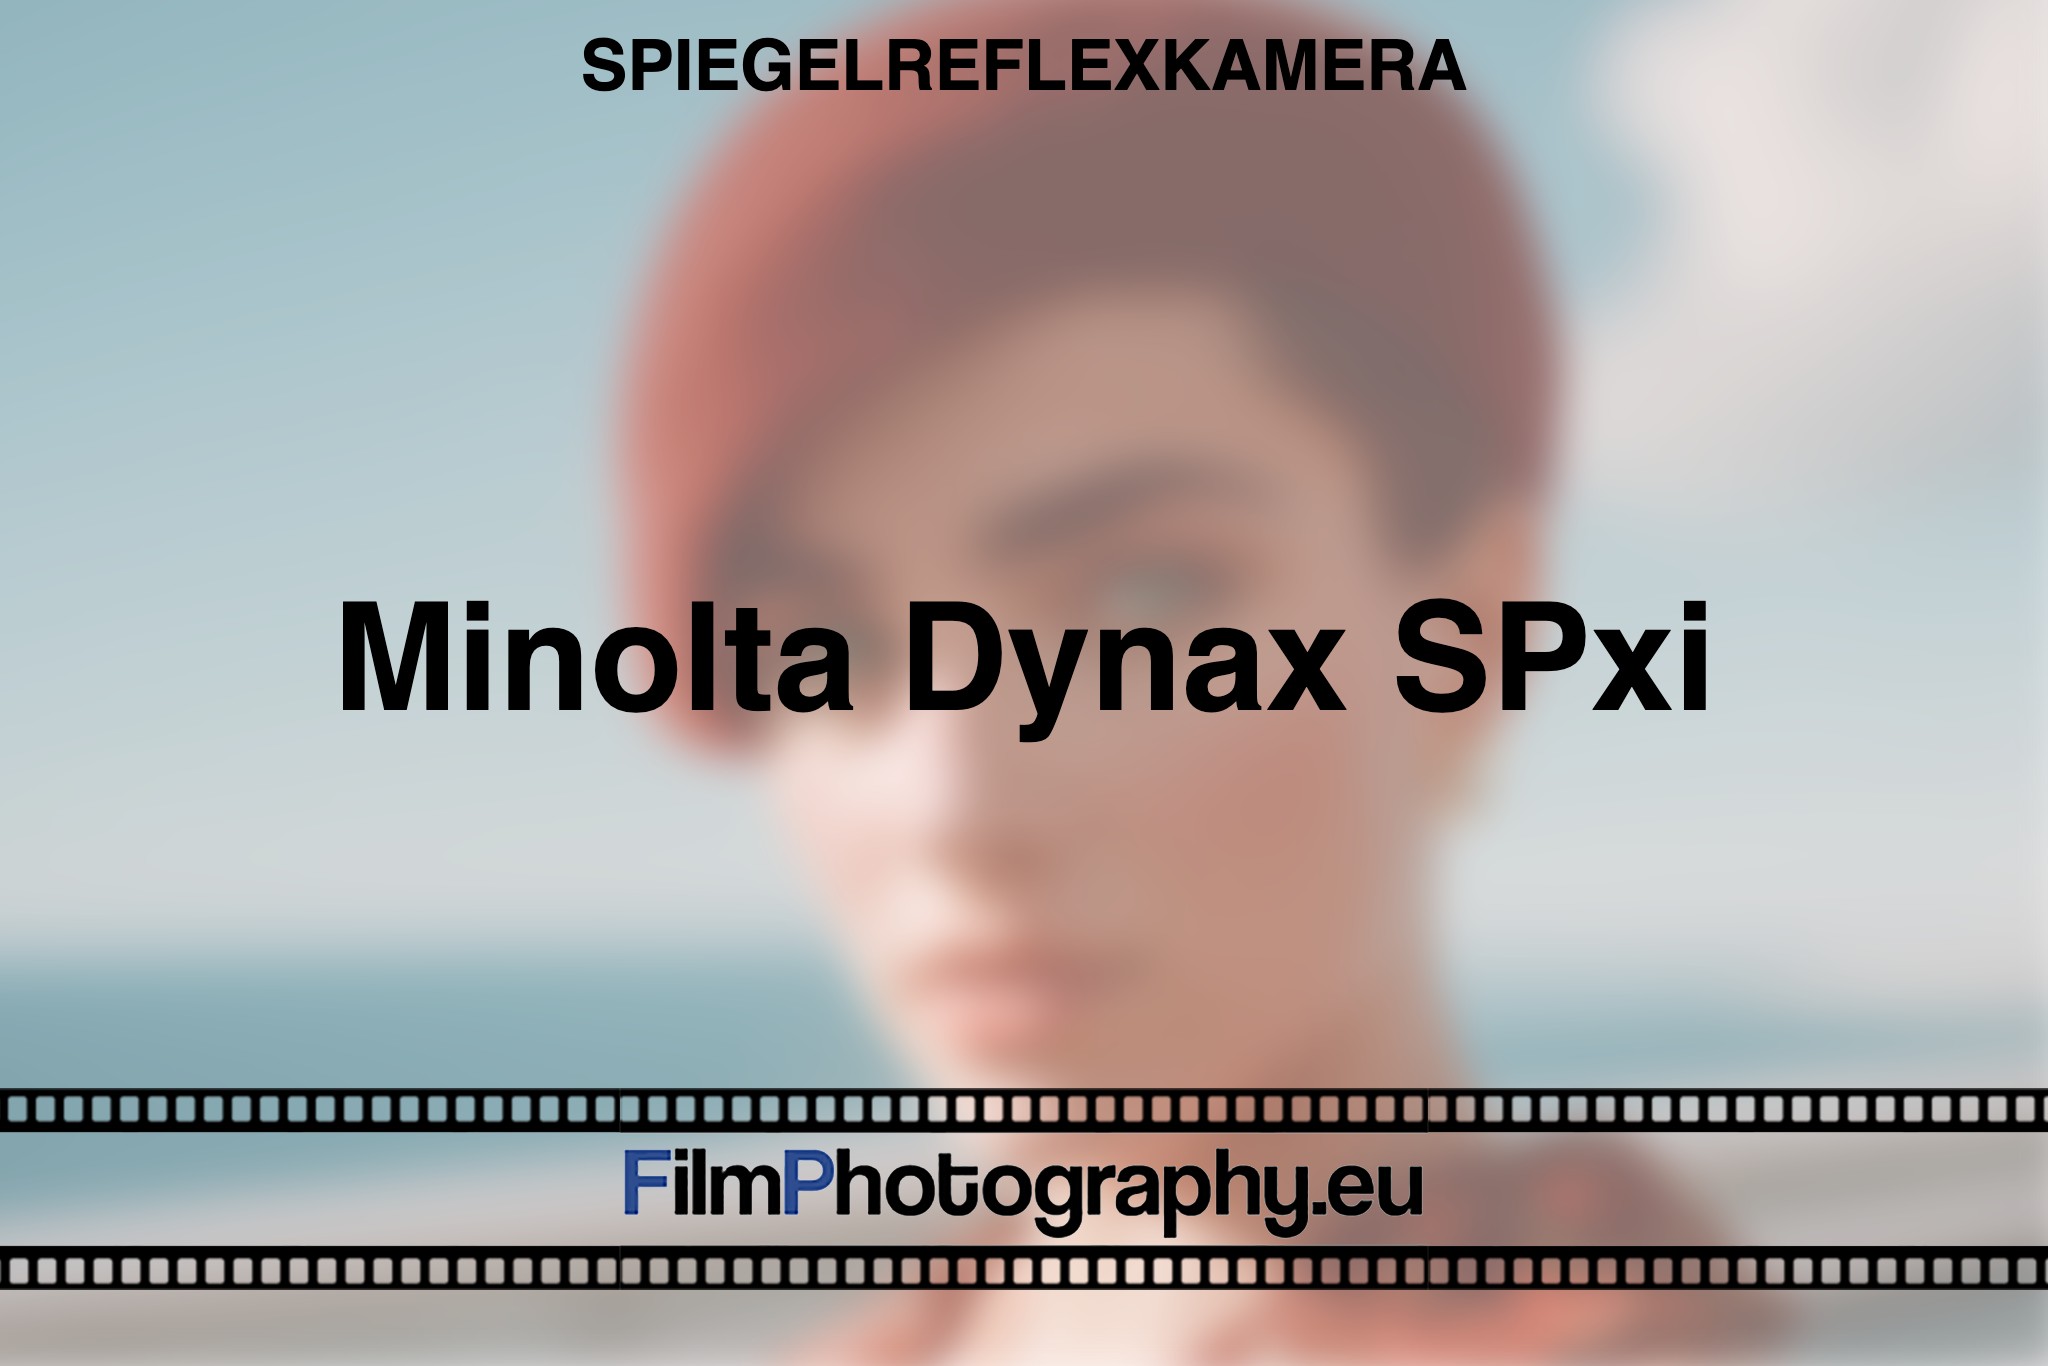 minolta-dynax-spxi-spiegelreflexkamera-bnv